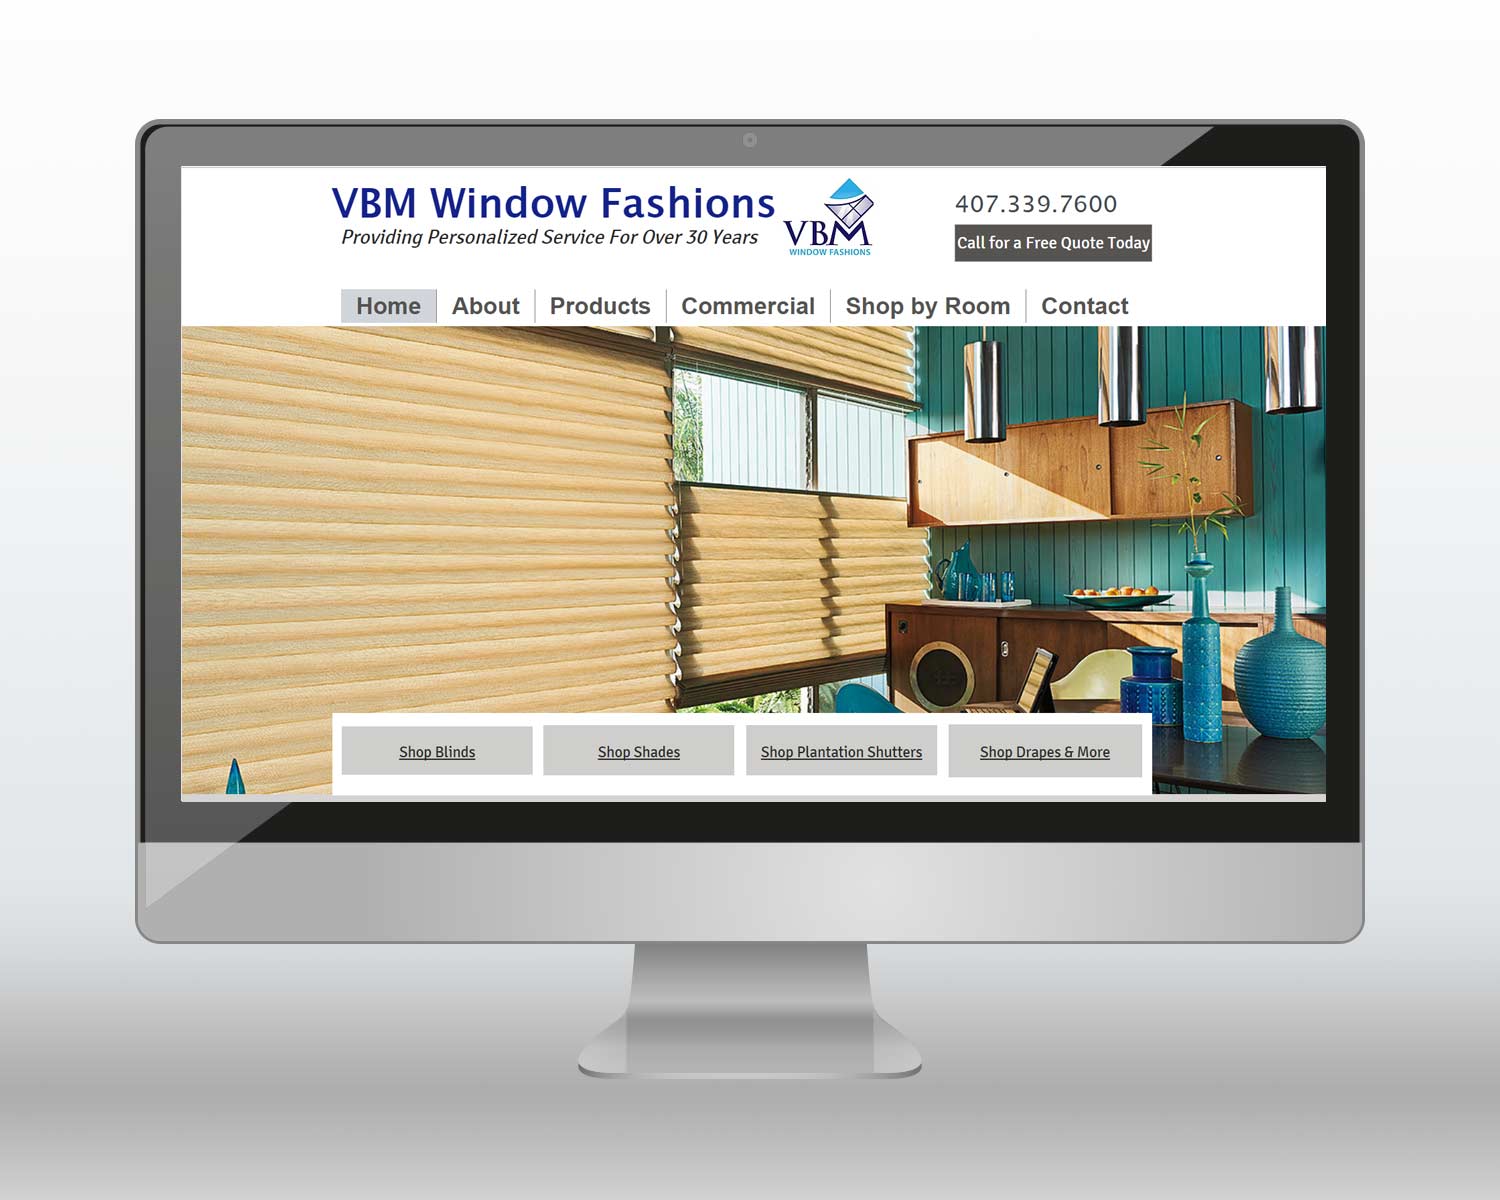 VBM Windows Website